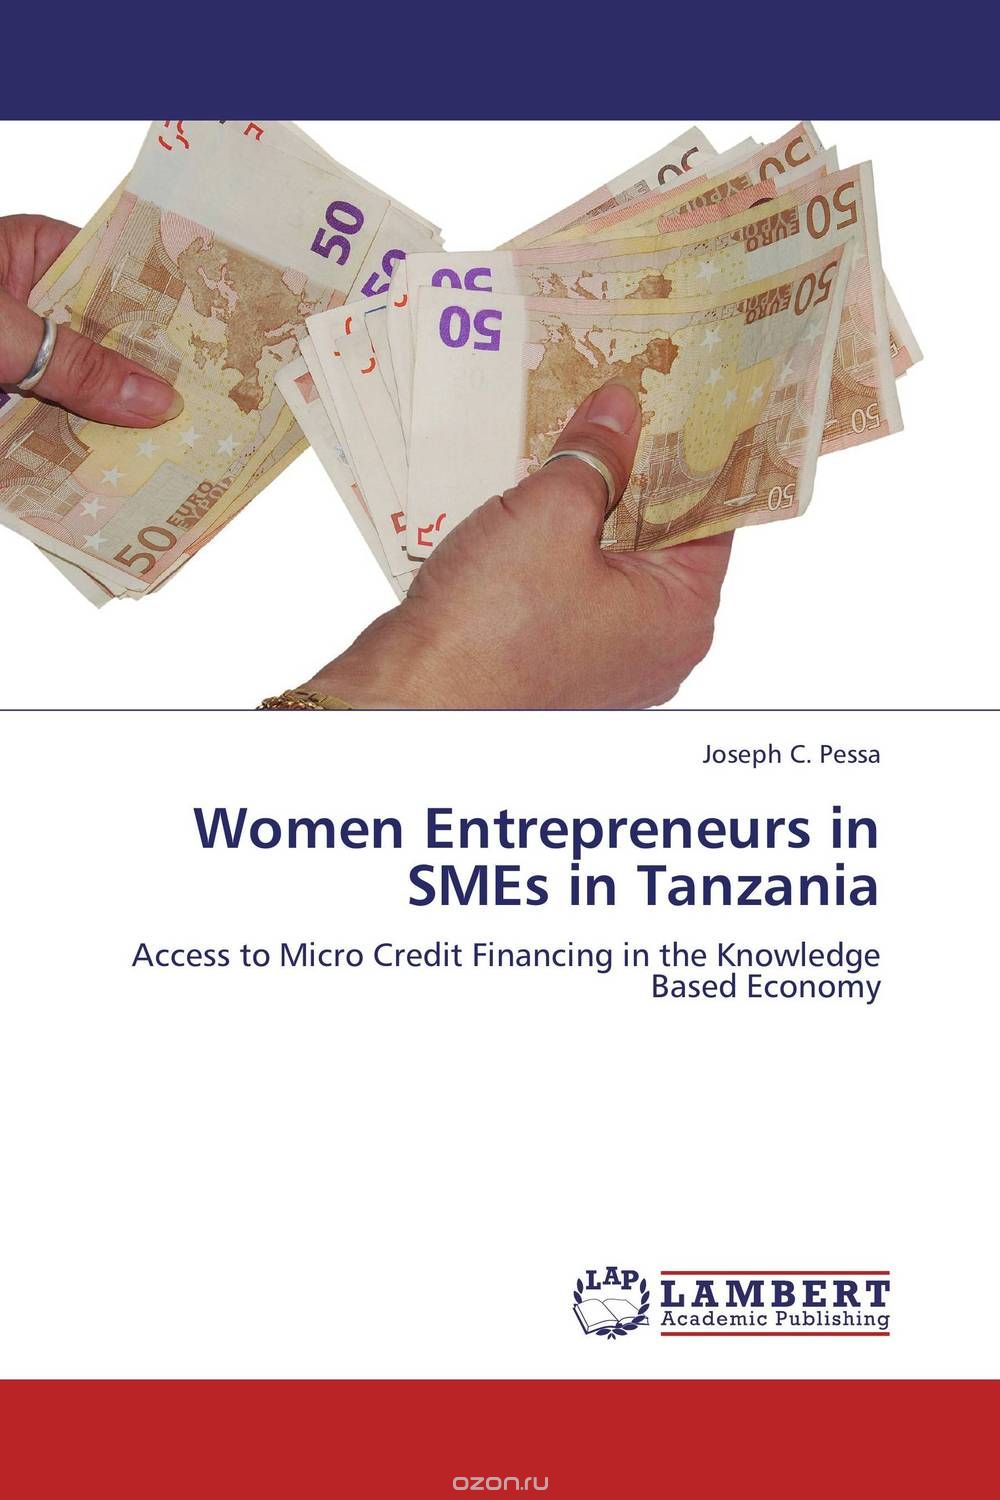 Скачать книгу "Women Entrepreneurs in SMEs in Tanzania"